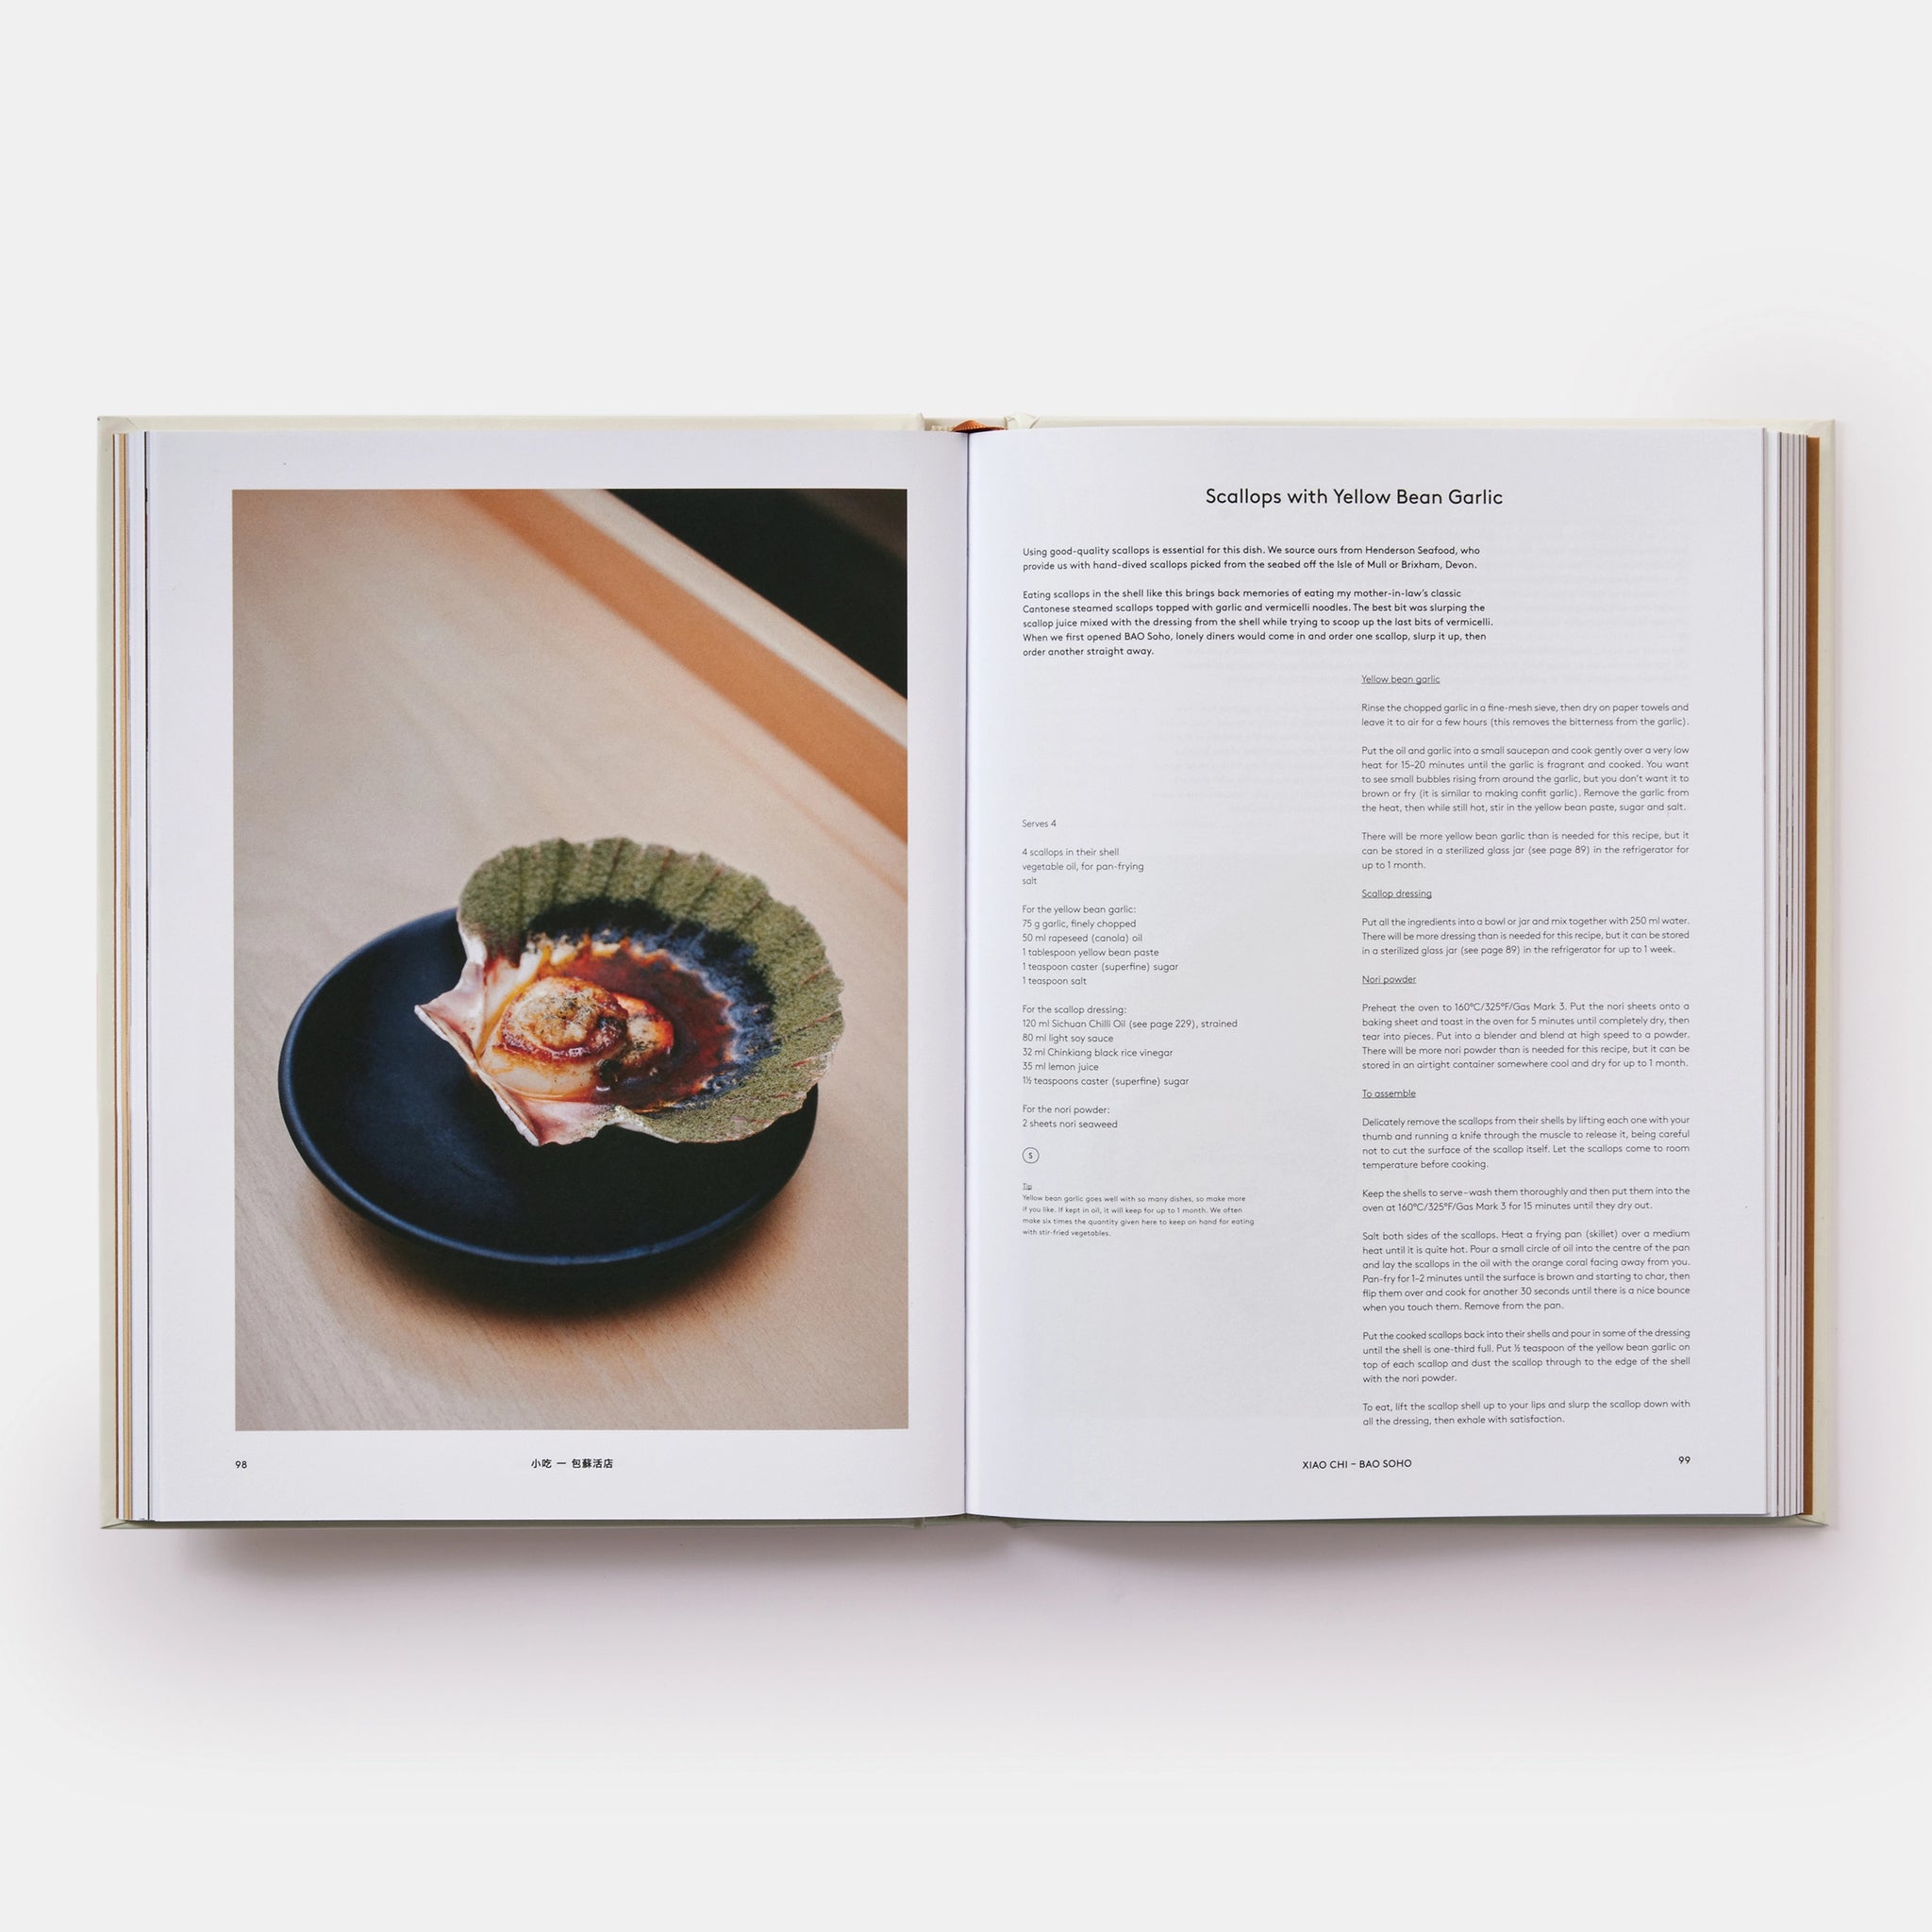 BAO Cookbook